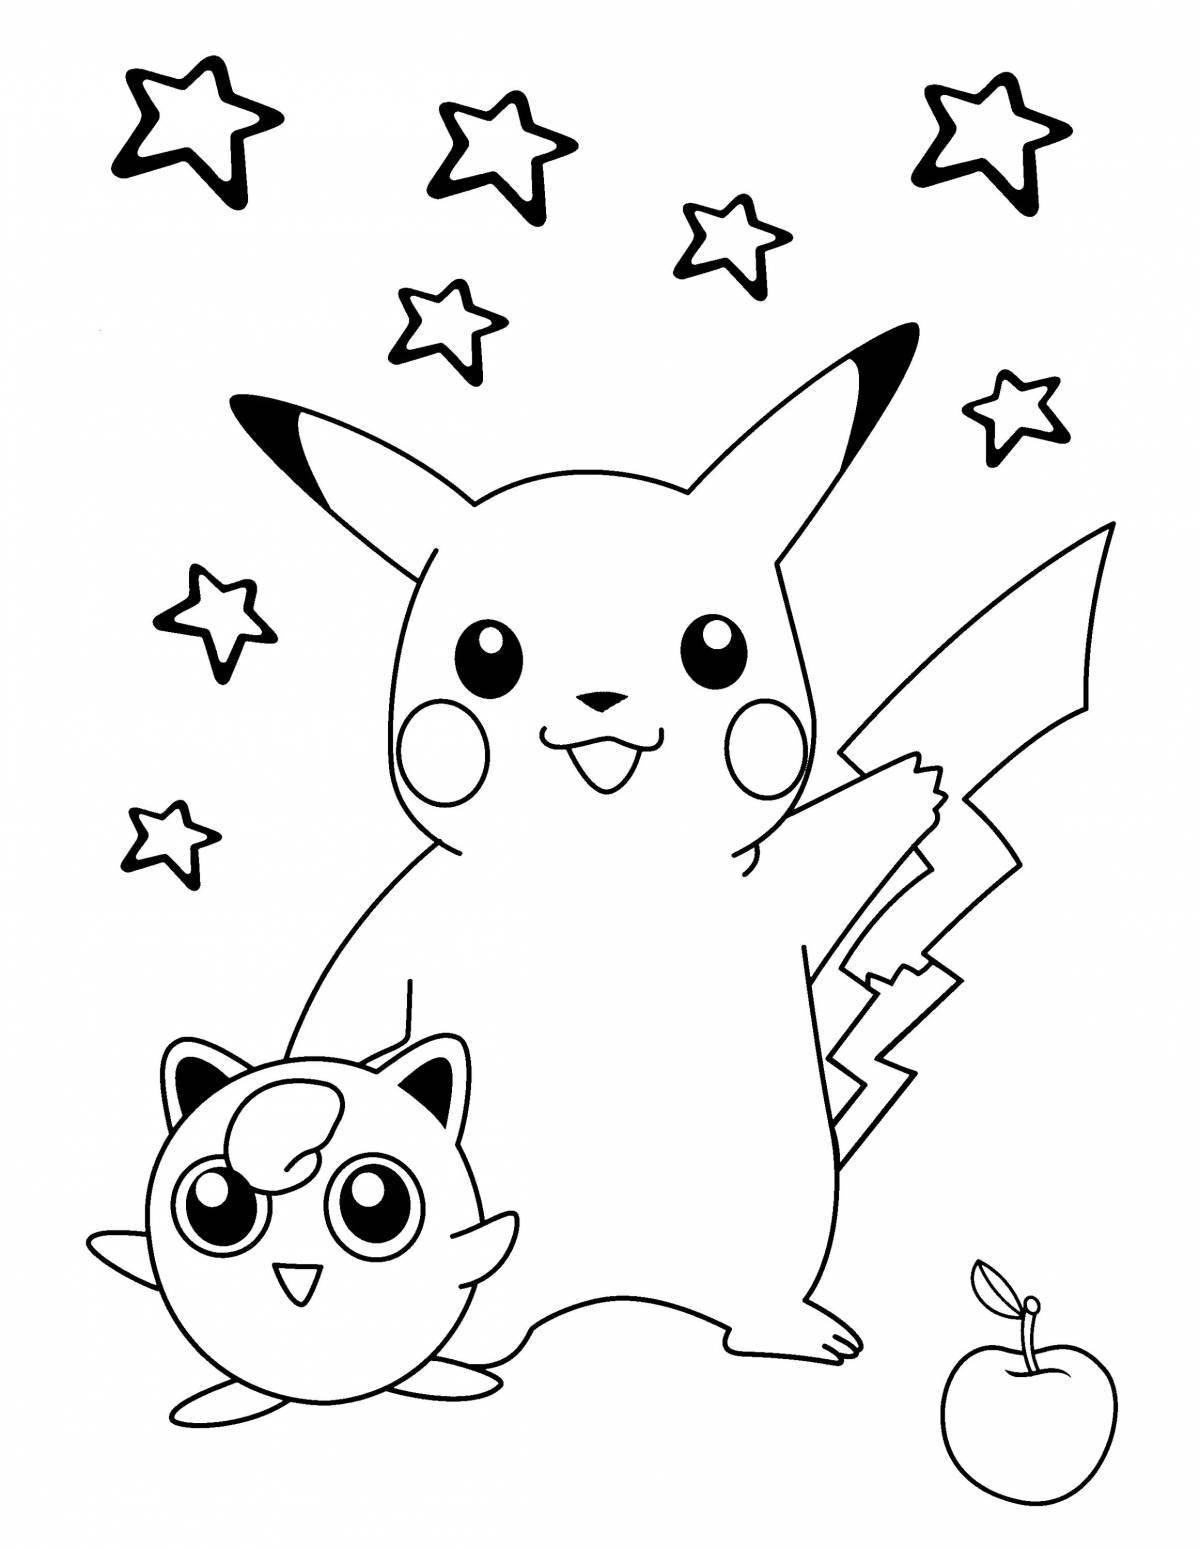 Adorable pikachu cat coloring page